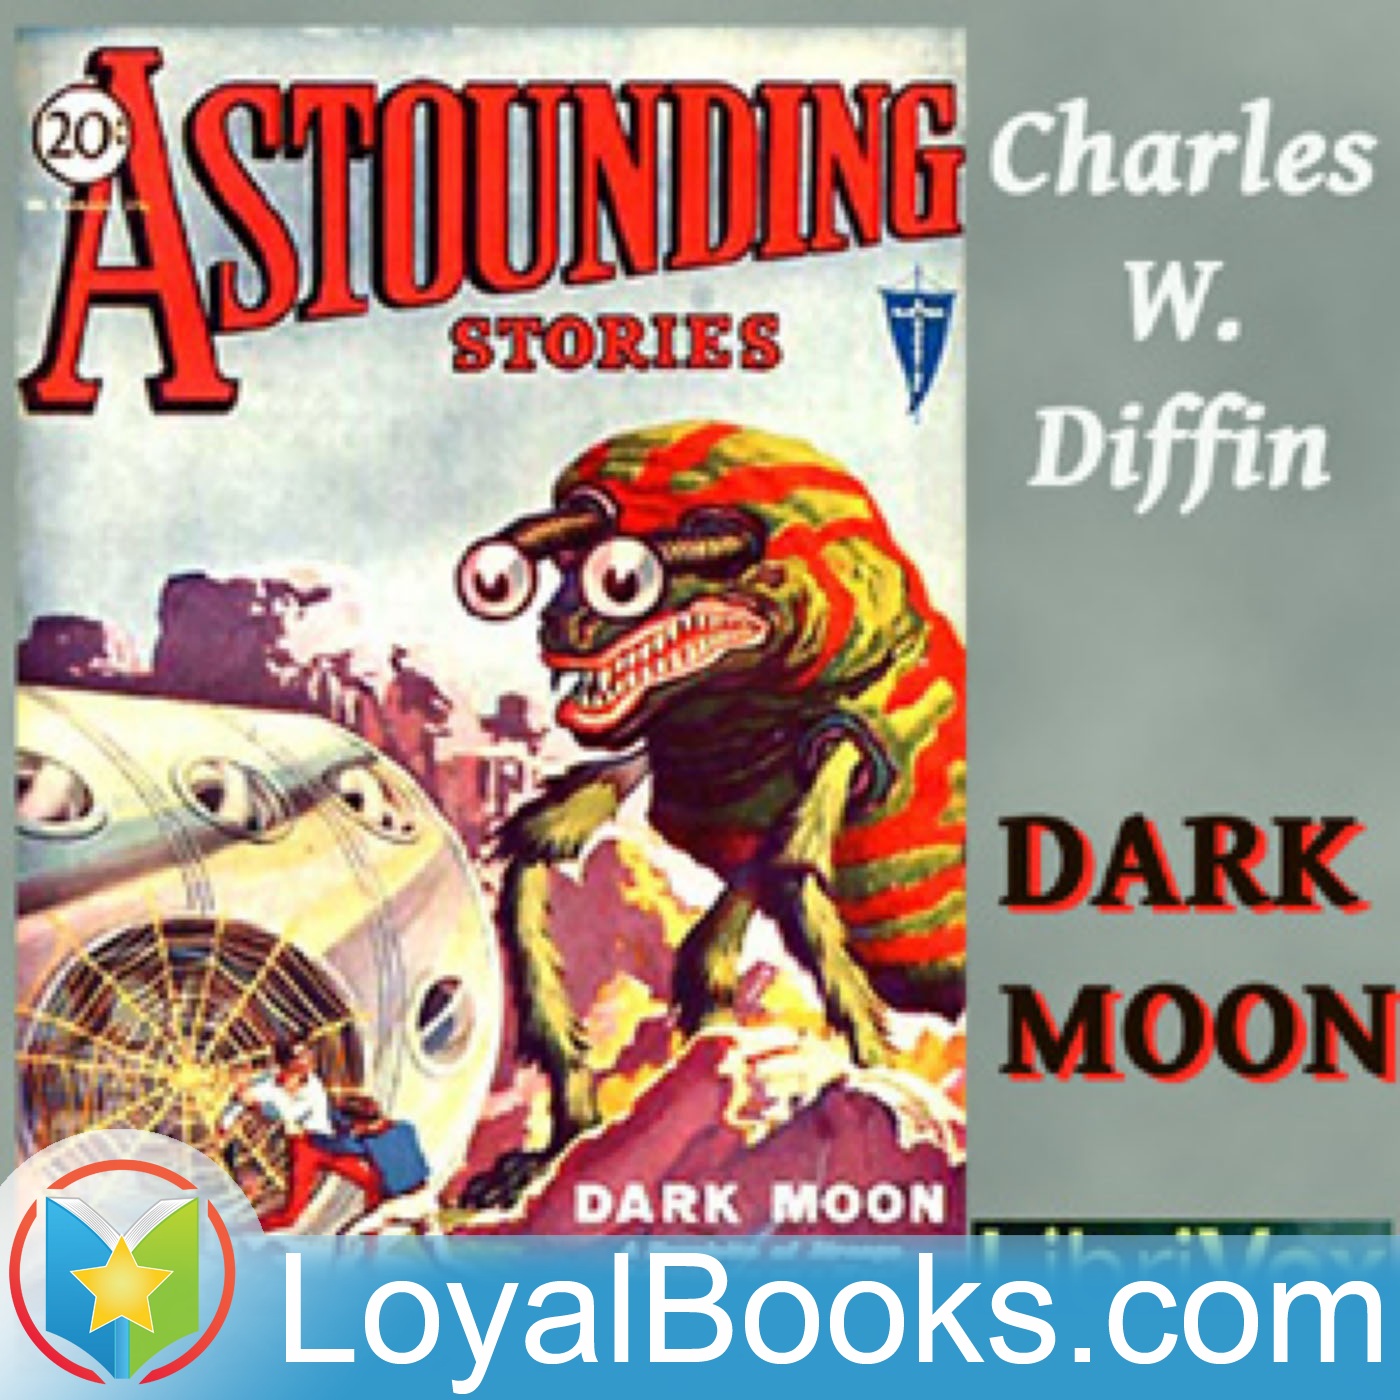 Dark Moon by Charles W. Diffin